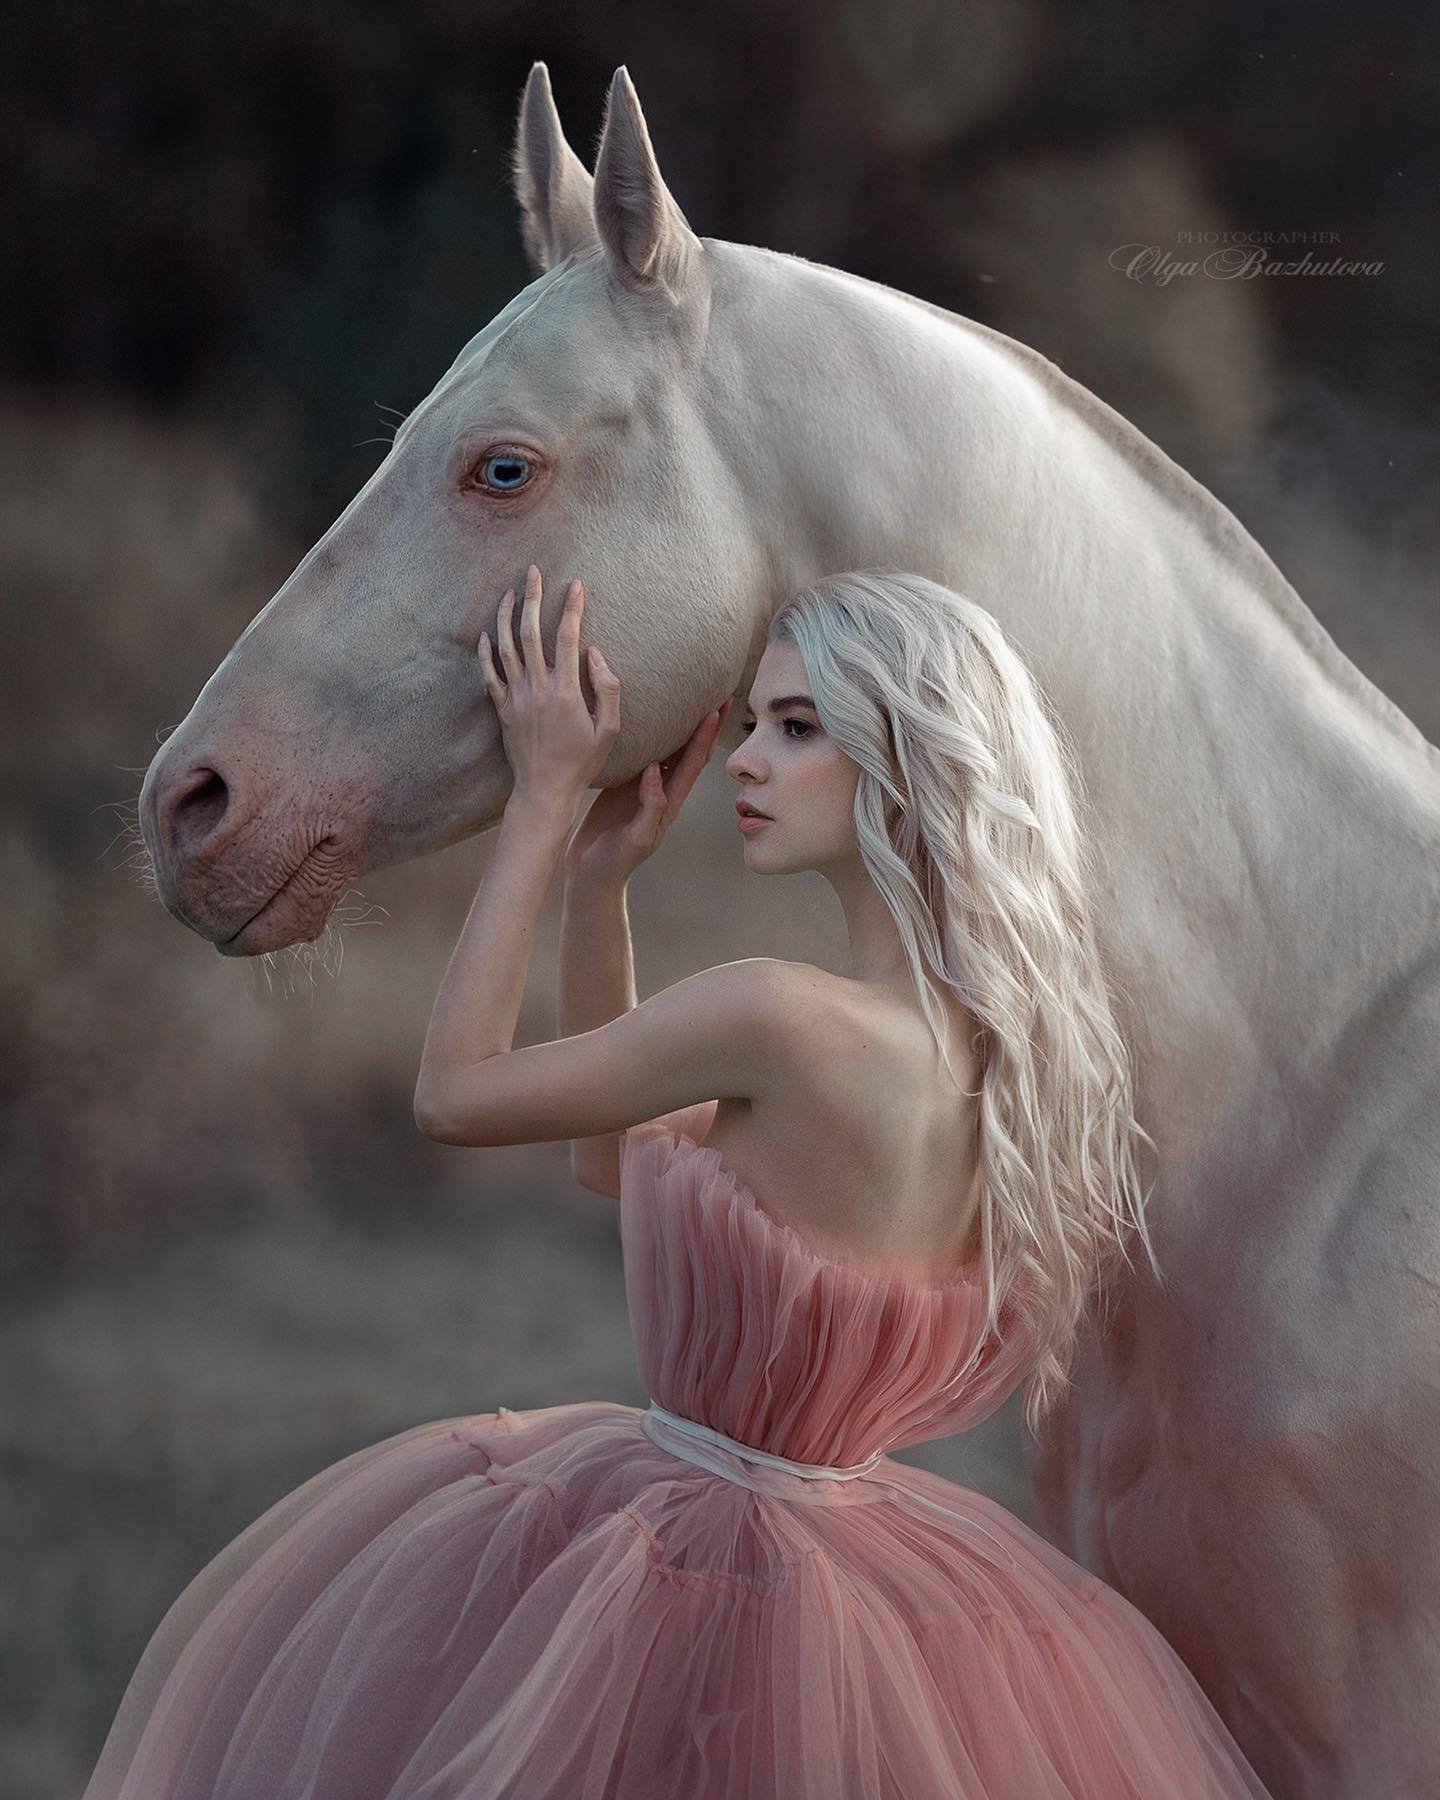 Olga Bazhutova fotografia equestre - Modelo posando de vestido rosa bailarina